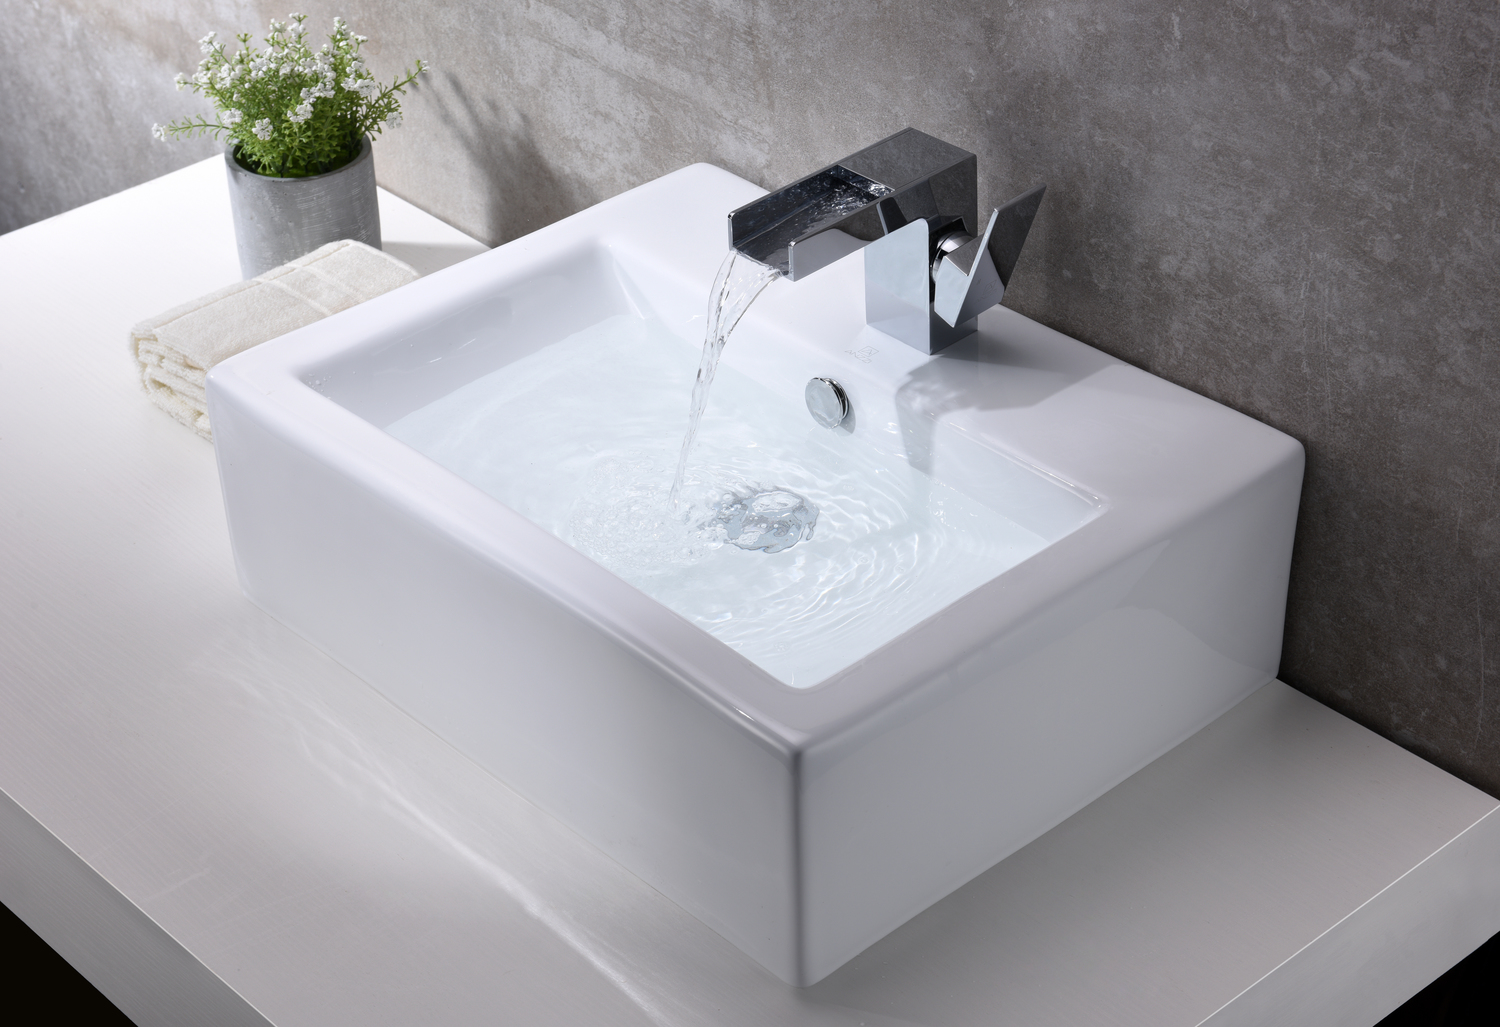 bathroom vanities with tops for cheap Anzzi BATHROOM - Sinks - Vessel - Ceramic / Procelain White